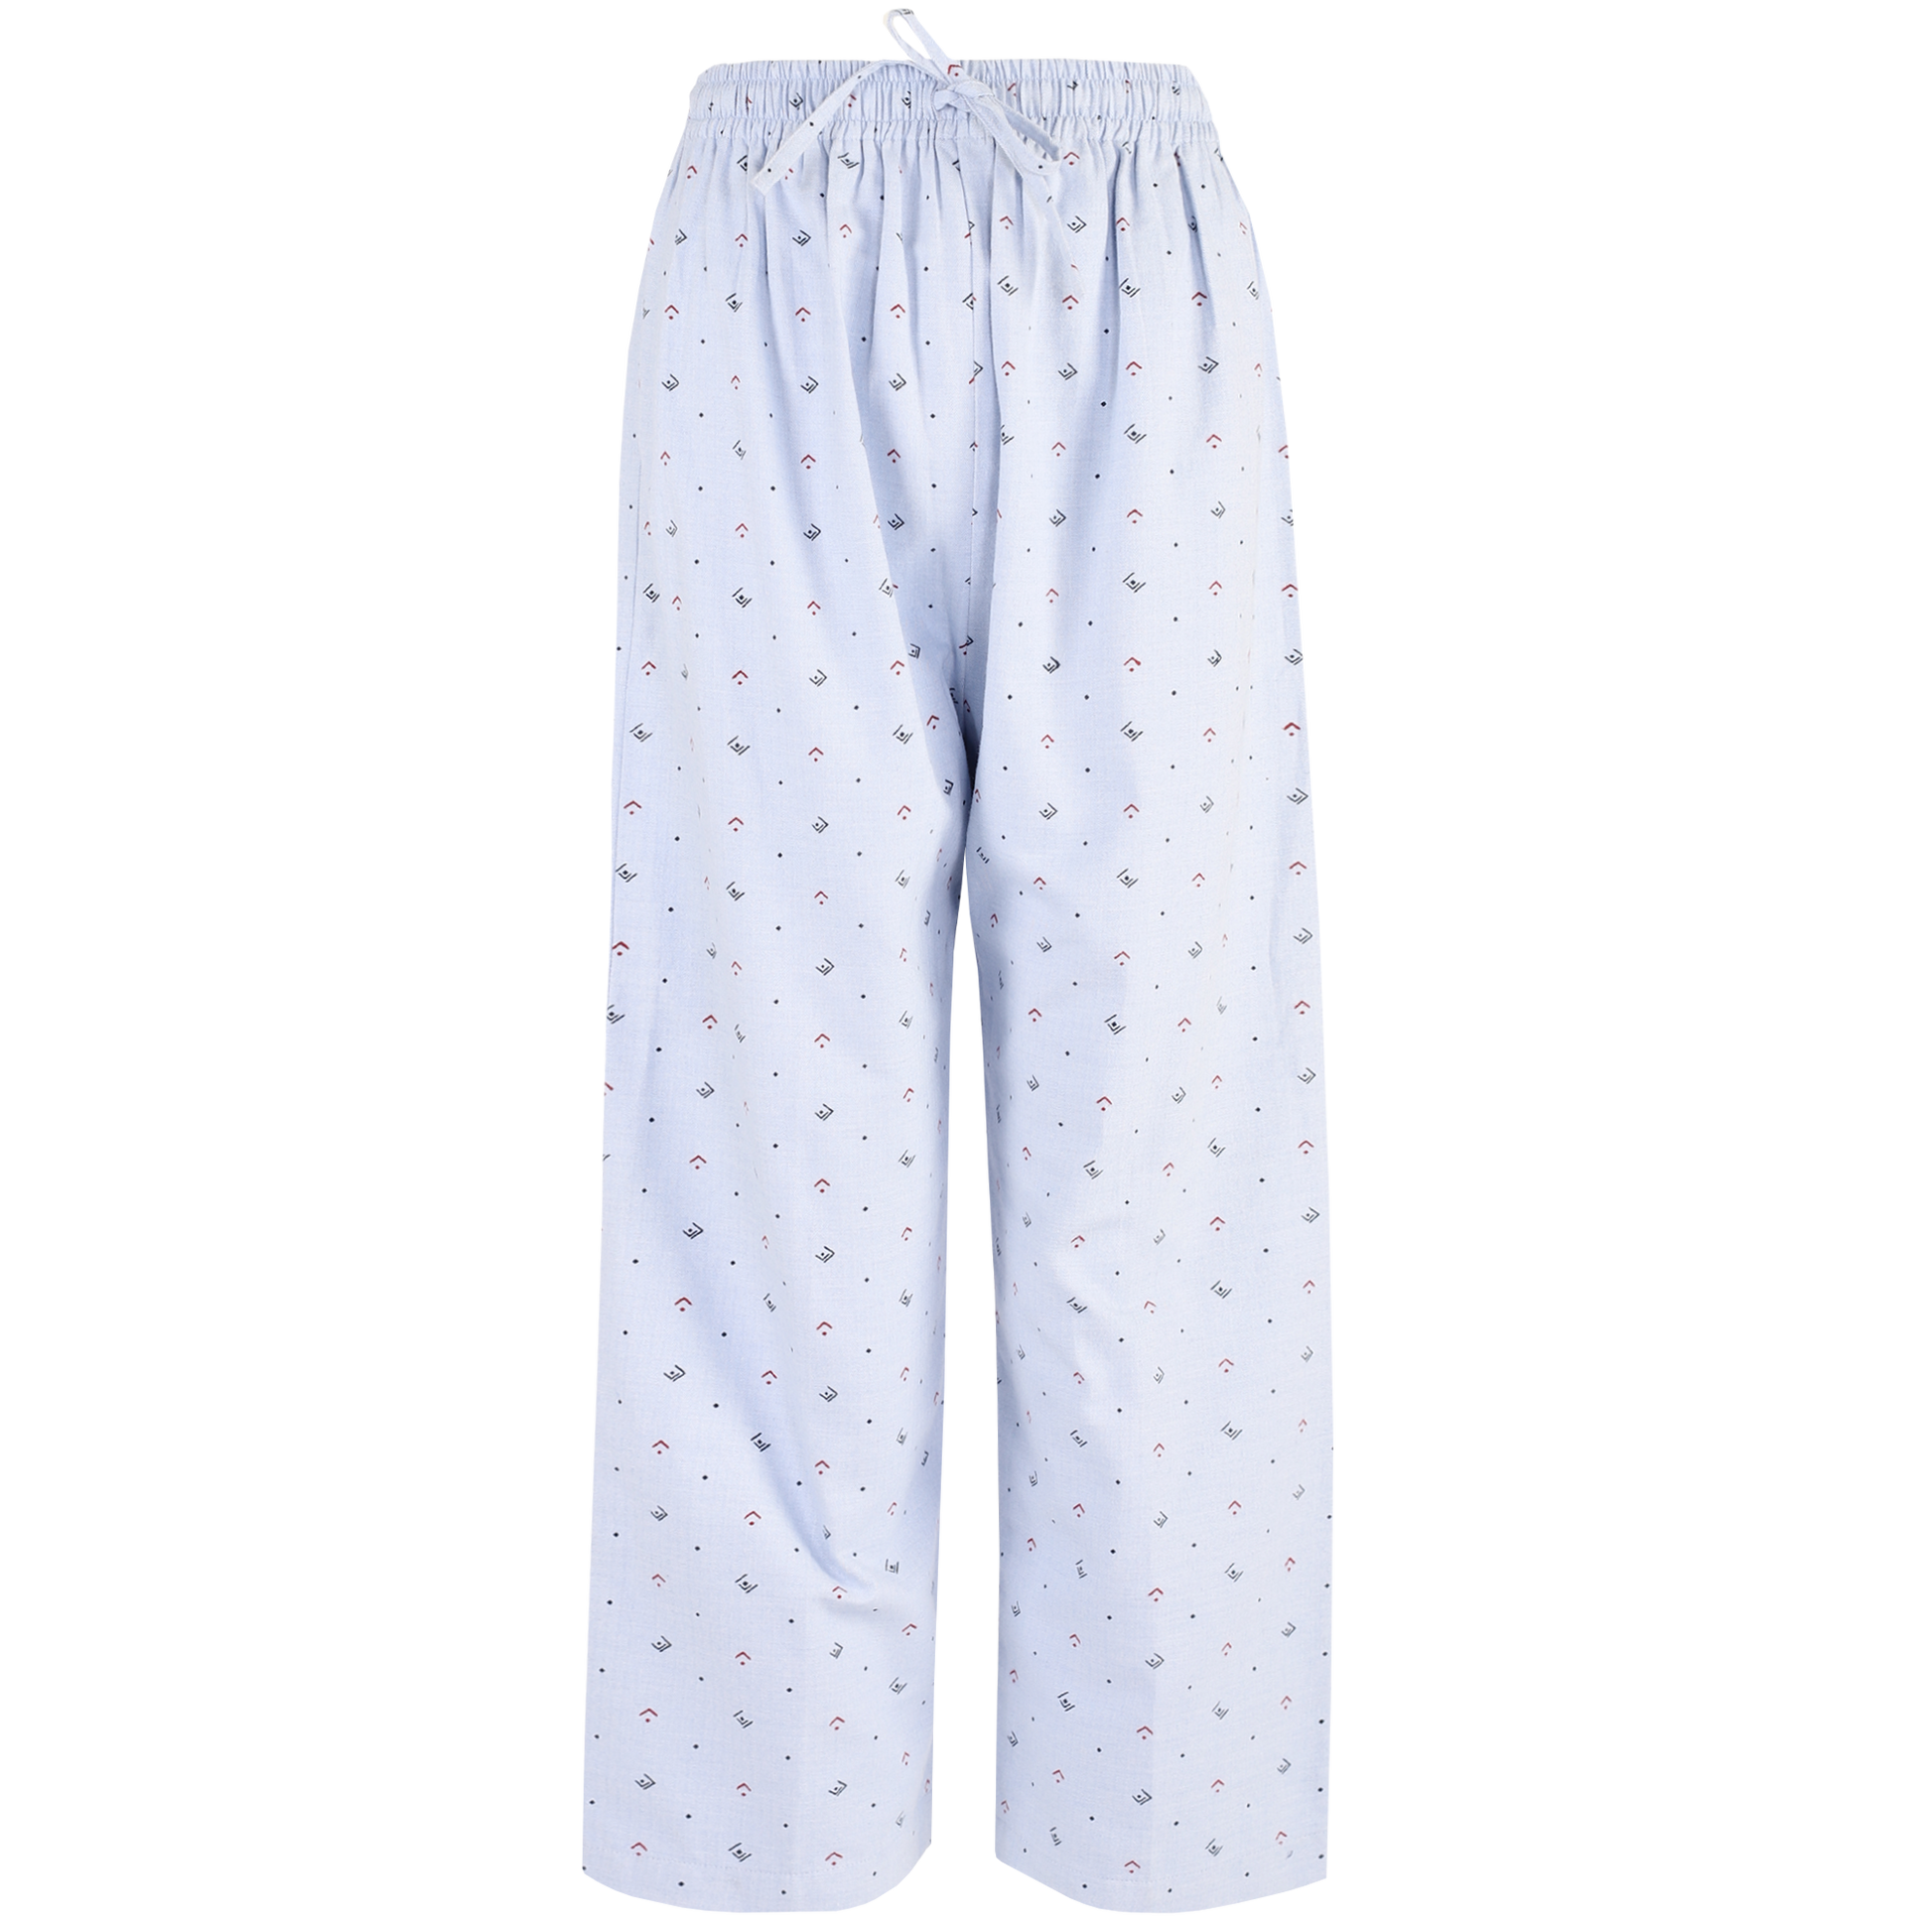 Blue Inpatient Pyjama Pants with Geometric Print — Hospital & Nursing Home uniforms by CYC